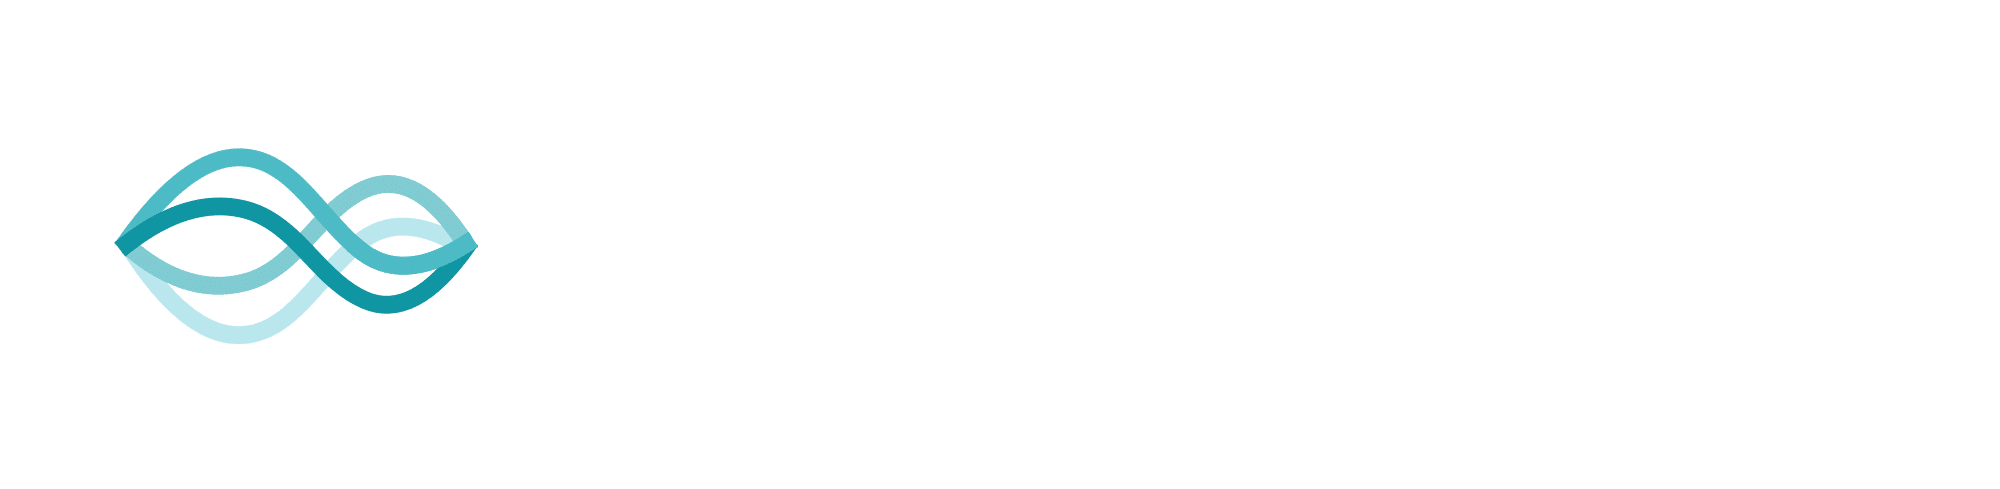 stackOcean-logo-white